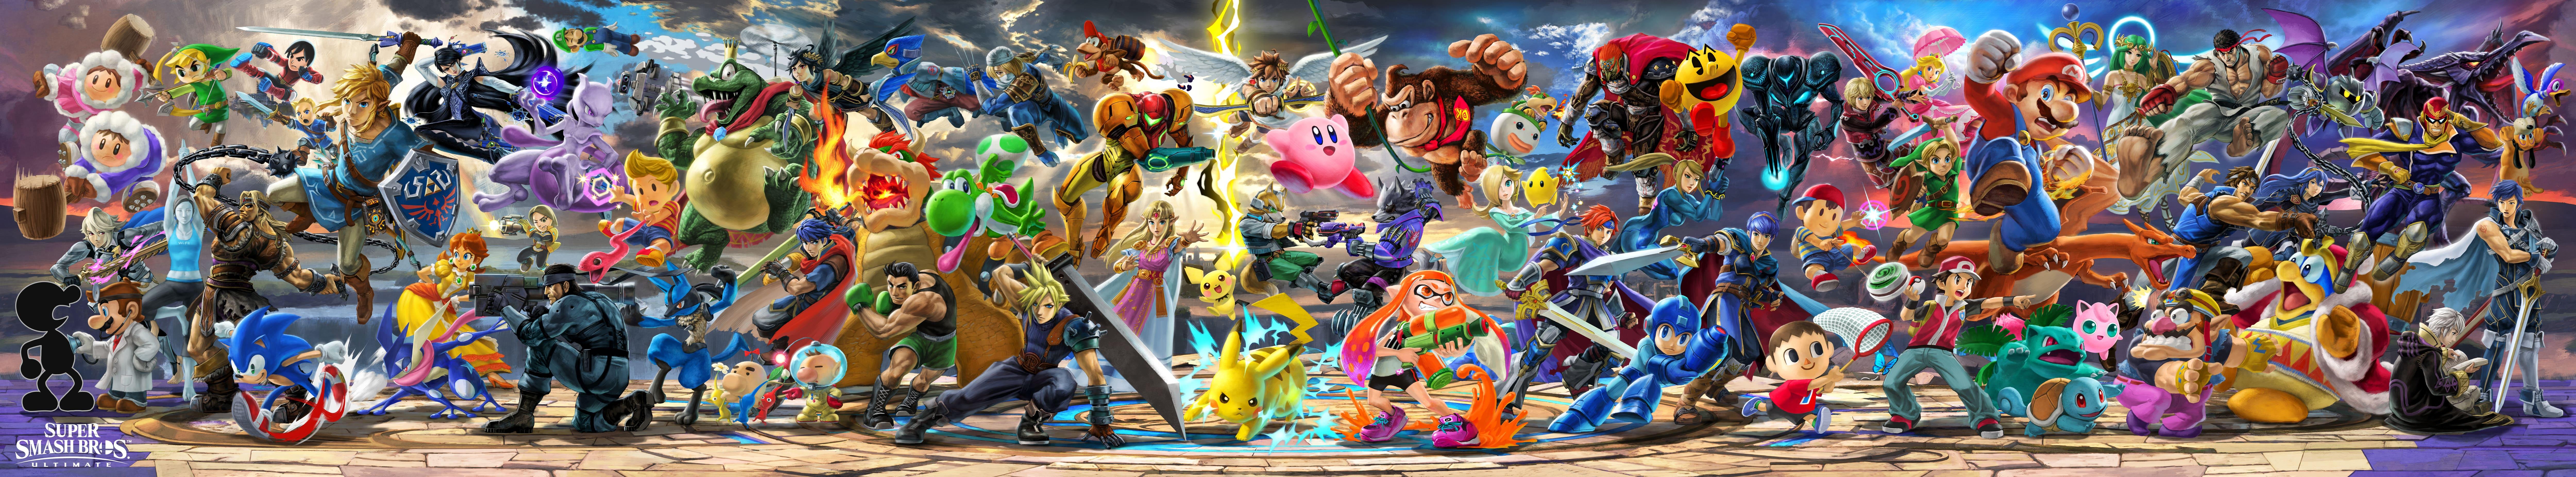 Super Smash Bros: Ultimate Wallpapers